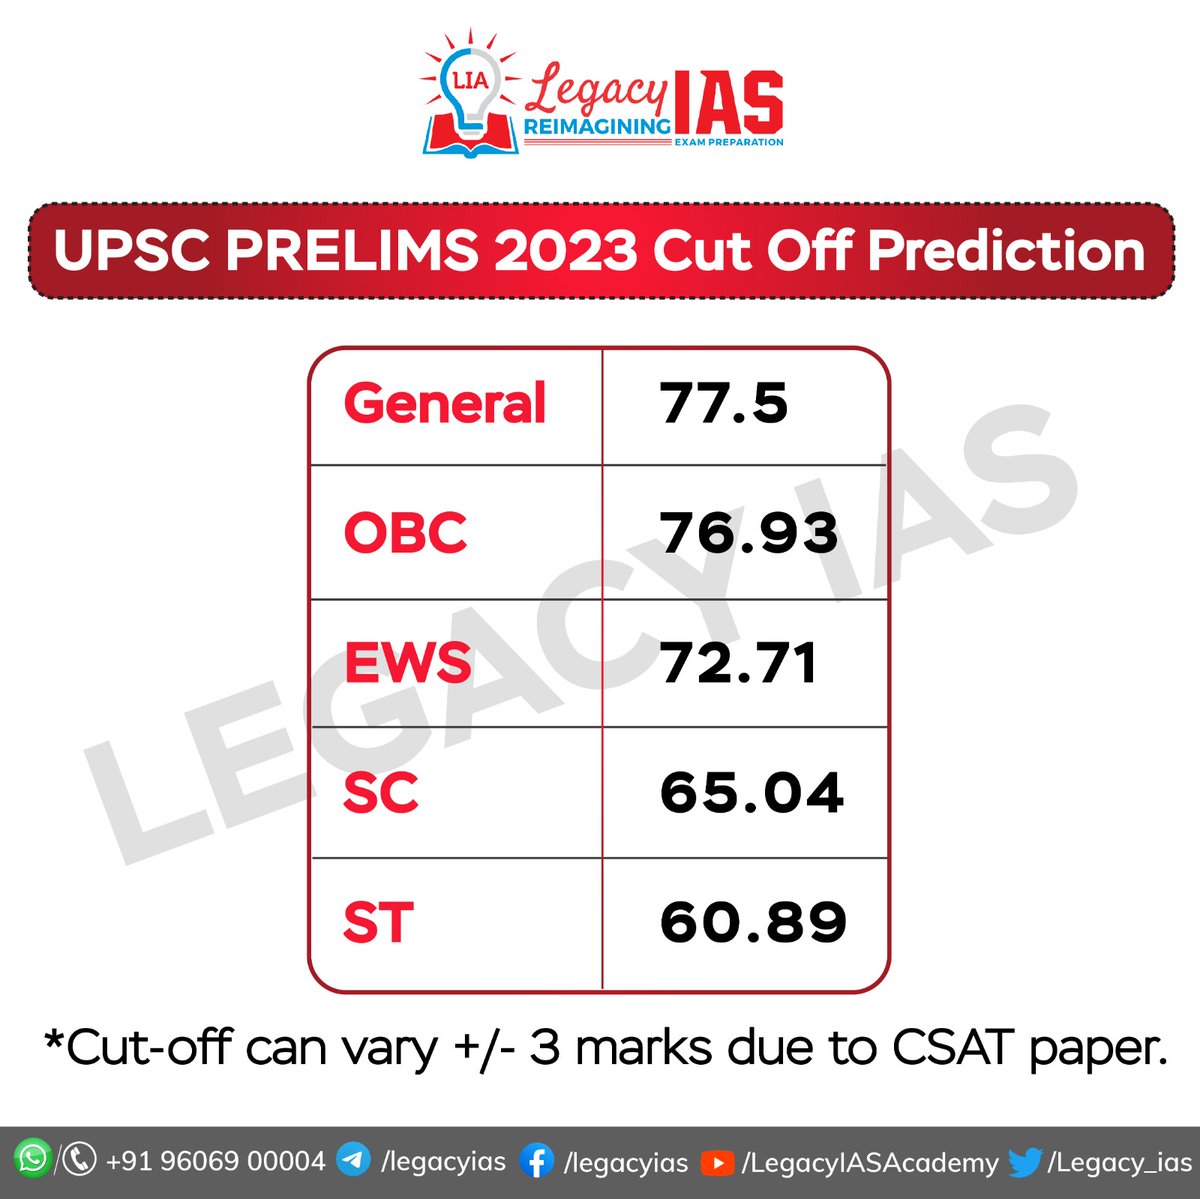 UPSC Prelims 2023 Cutoff Prediction by Legacy IAS Academy !!!
RT for max reach! 

#upscprelims2023 #cutoff #upscprelimscutoff #prelims2023 #Expectedcutoffprelims2023 #UPSCPrelims #UPSC2023 #UPSC #AkhandBharat #IPL2023Final